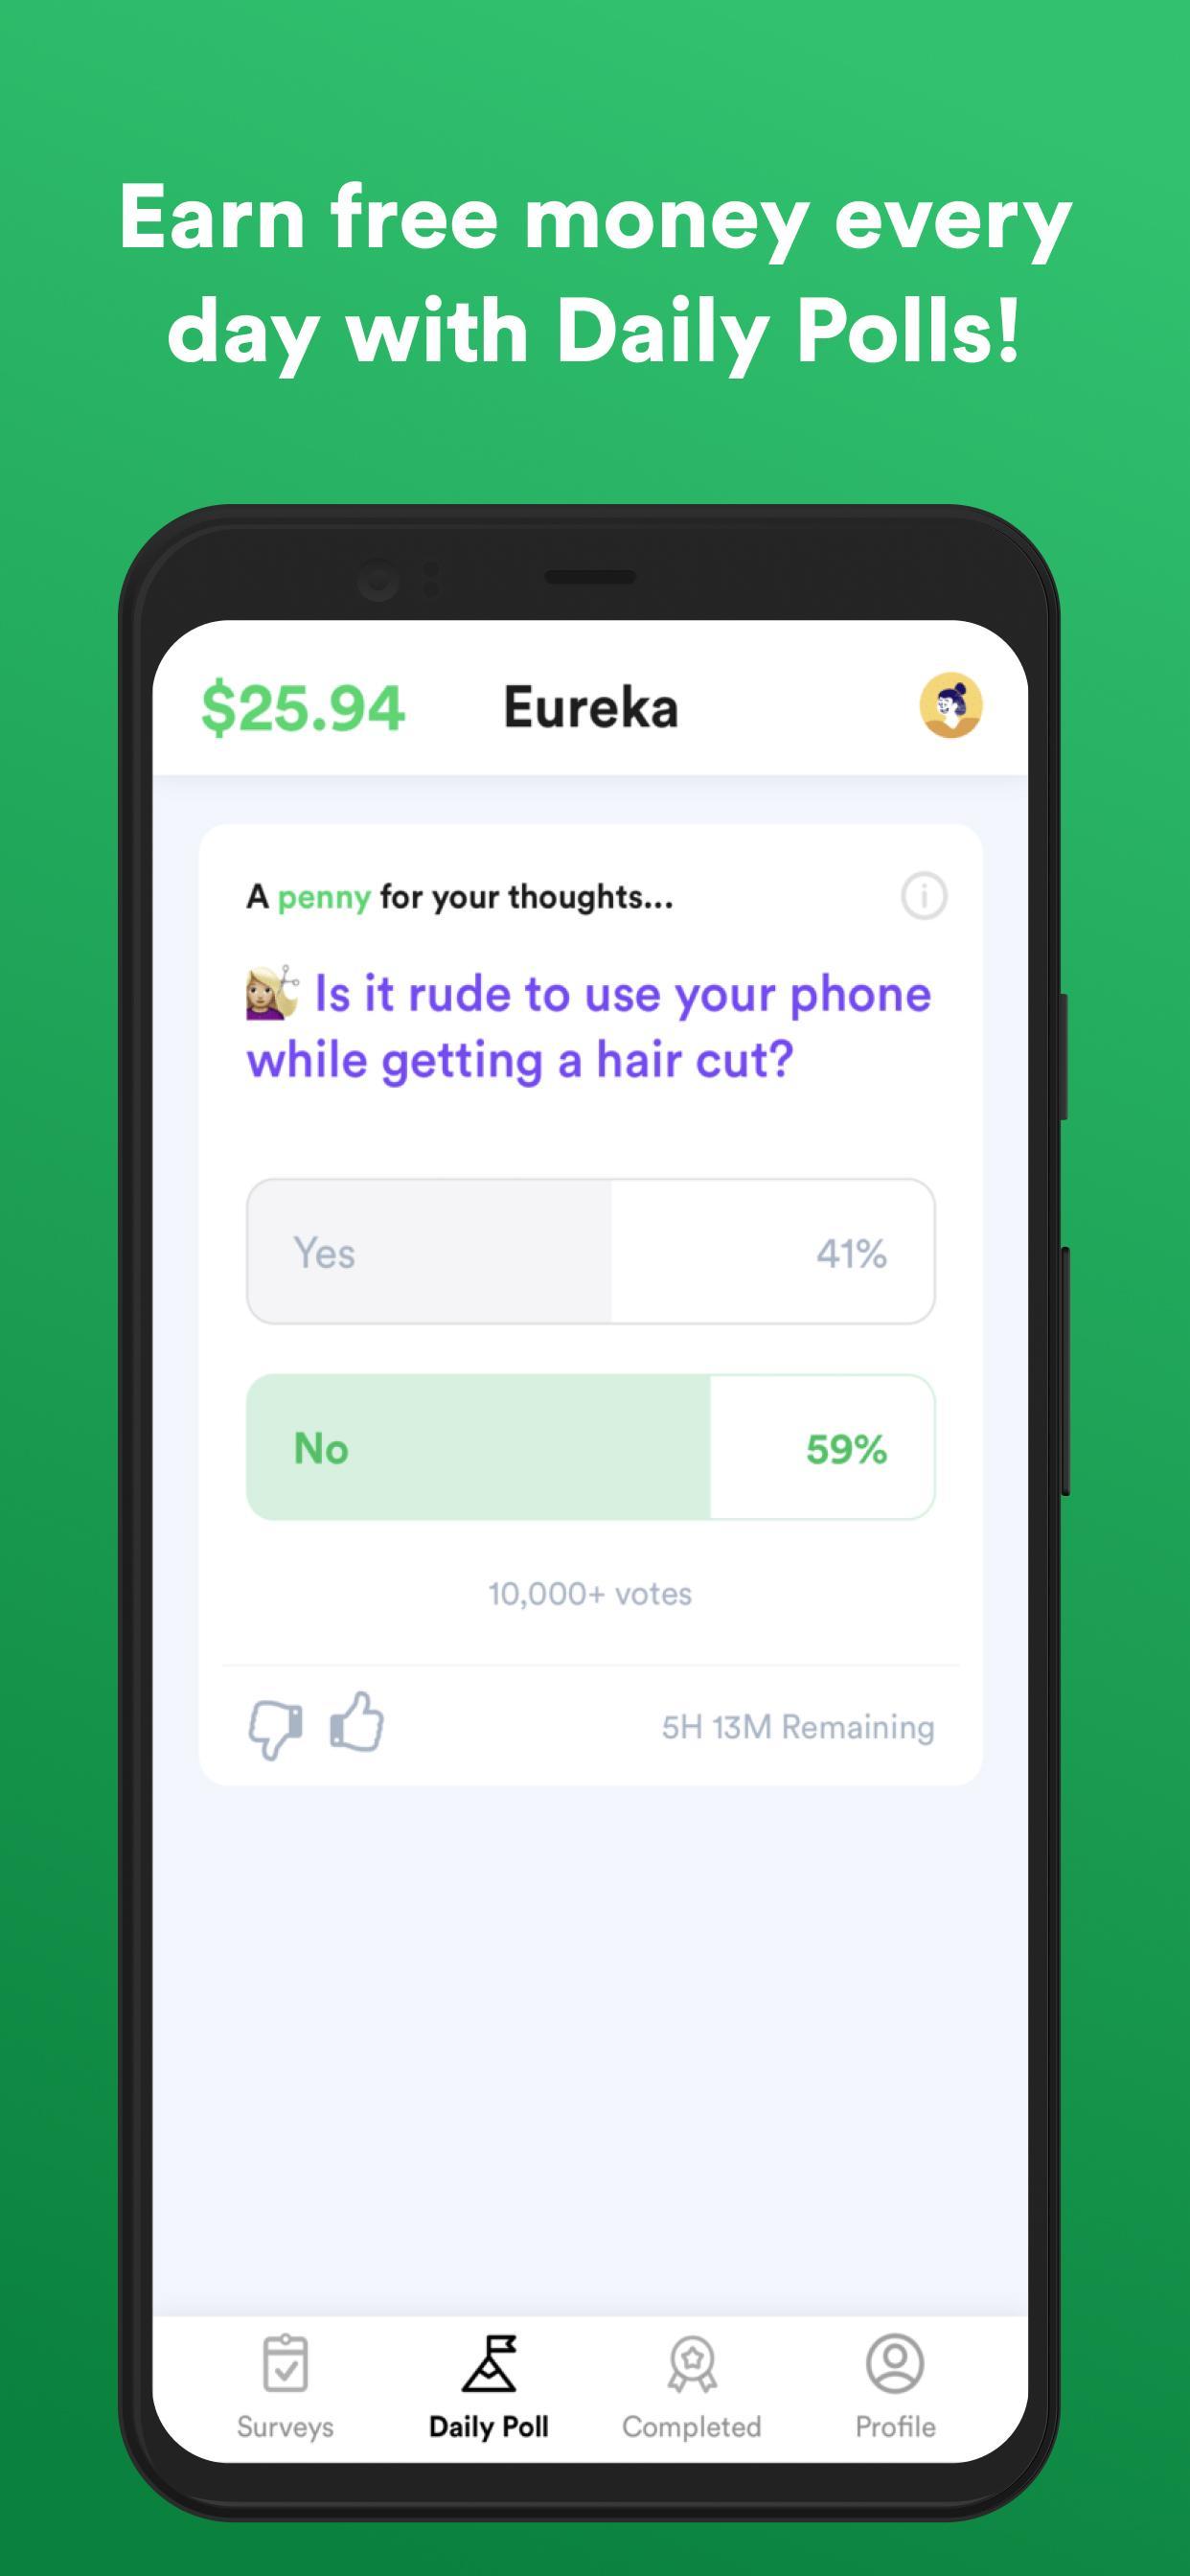 Eureka: Make money via surveys, get paid cash!